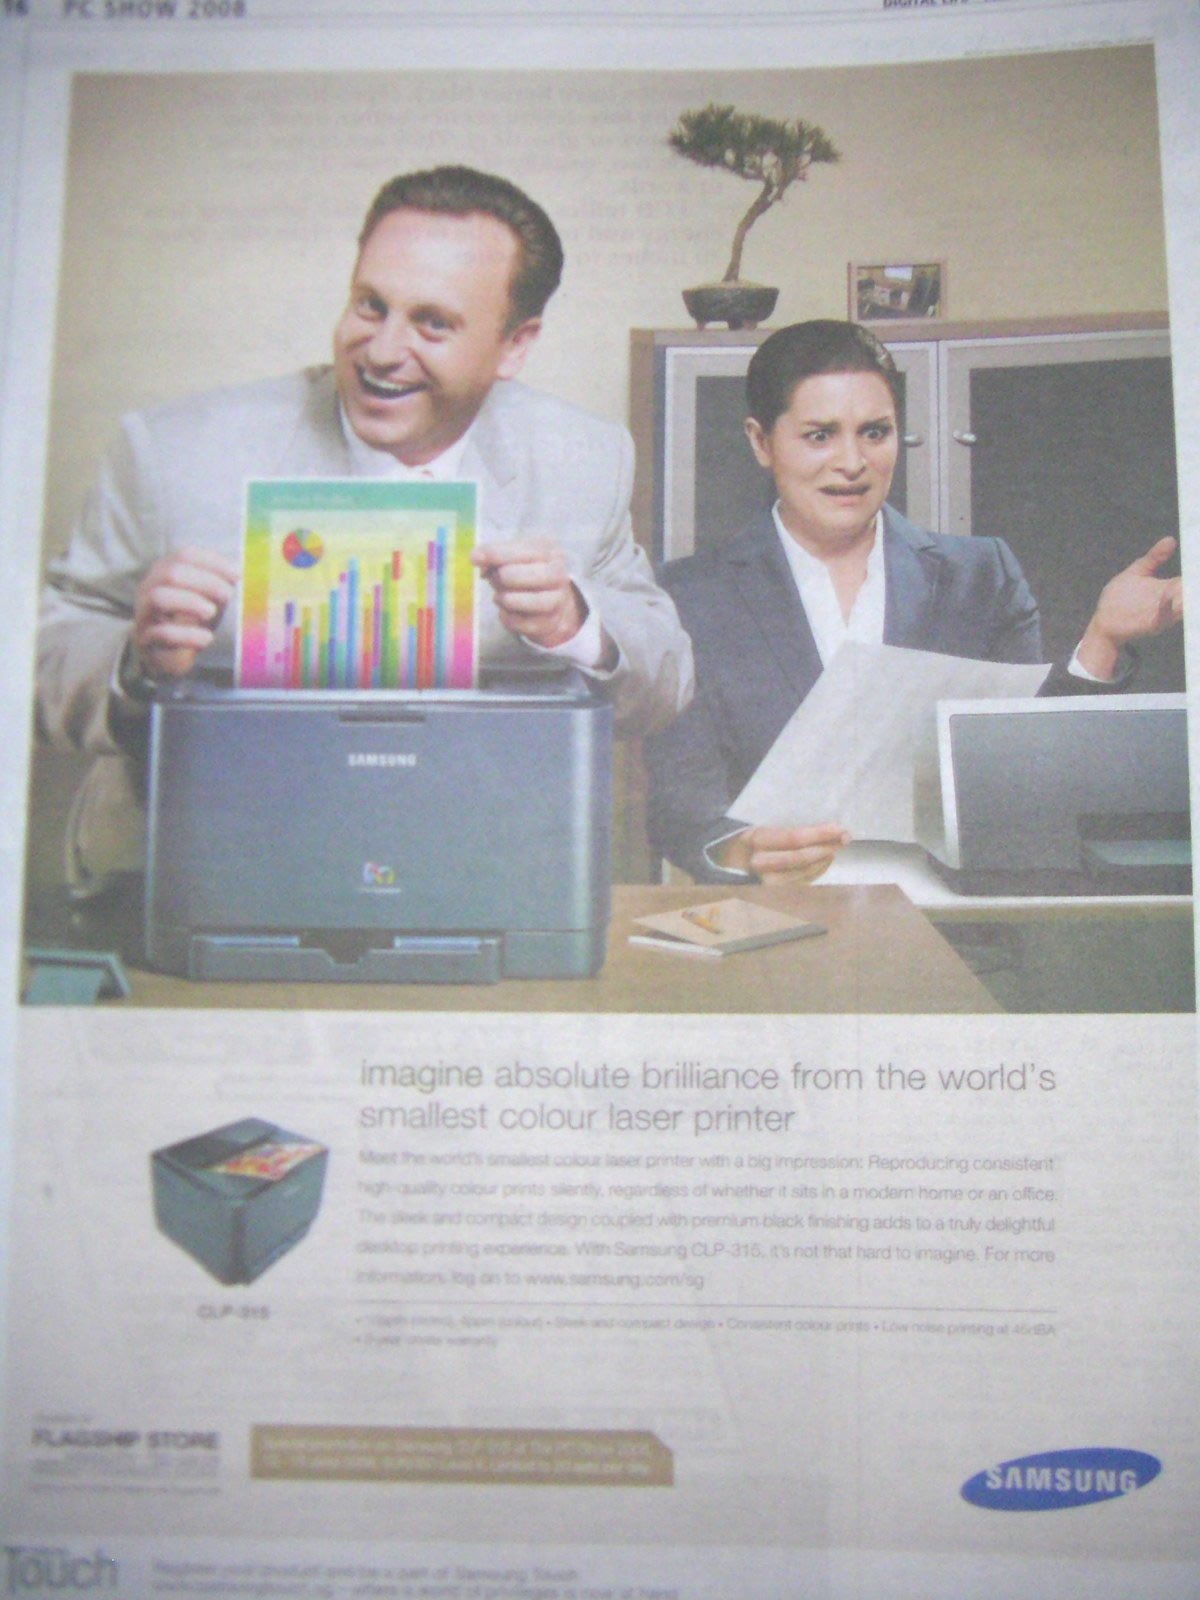 PC Show 2008 price list image brochure of Samsung Colour Laser